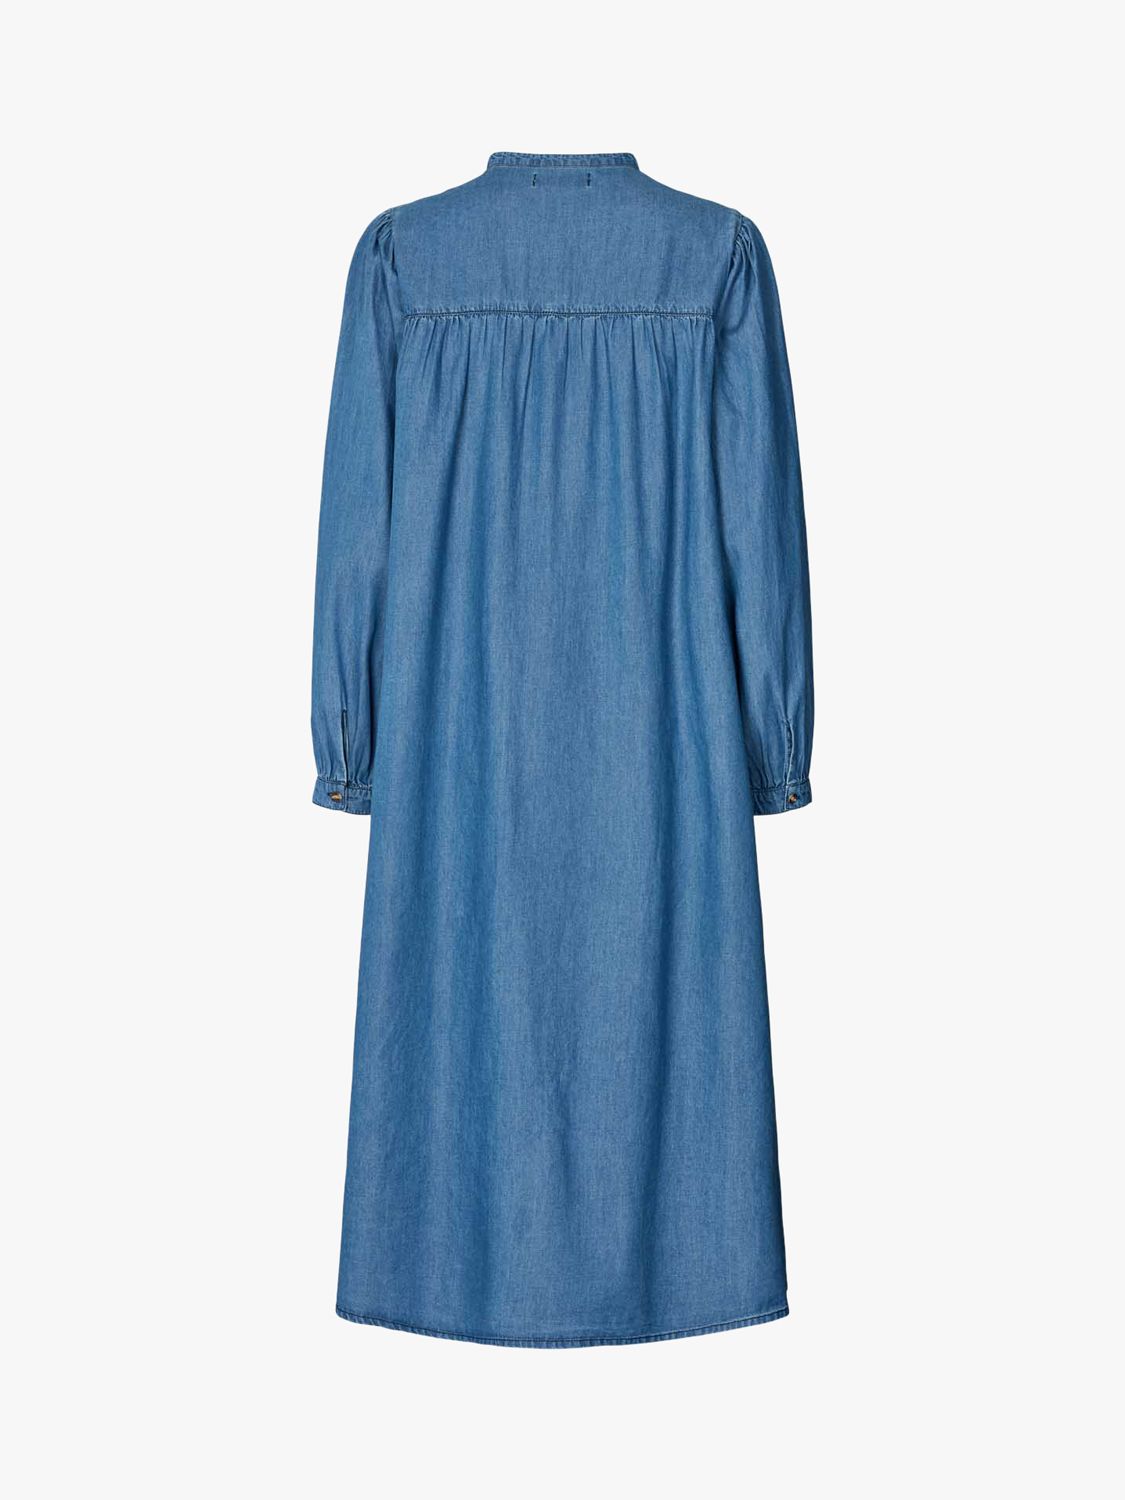 Lollys Laundry Jess Long Sleeve Shirt Dress, Blue, XS